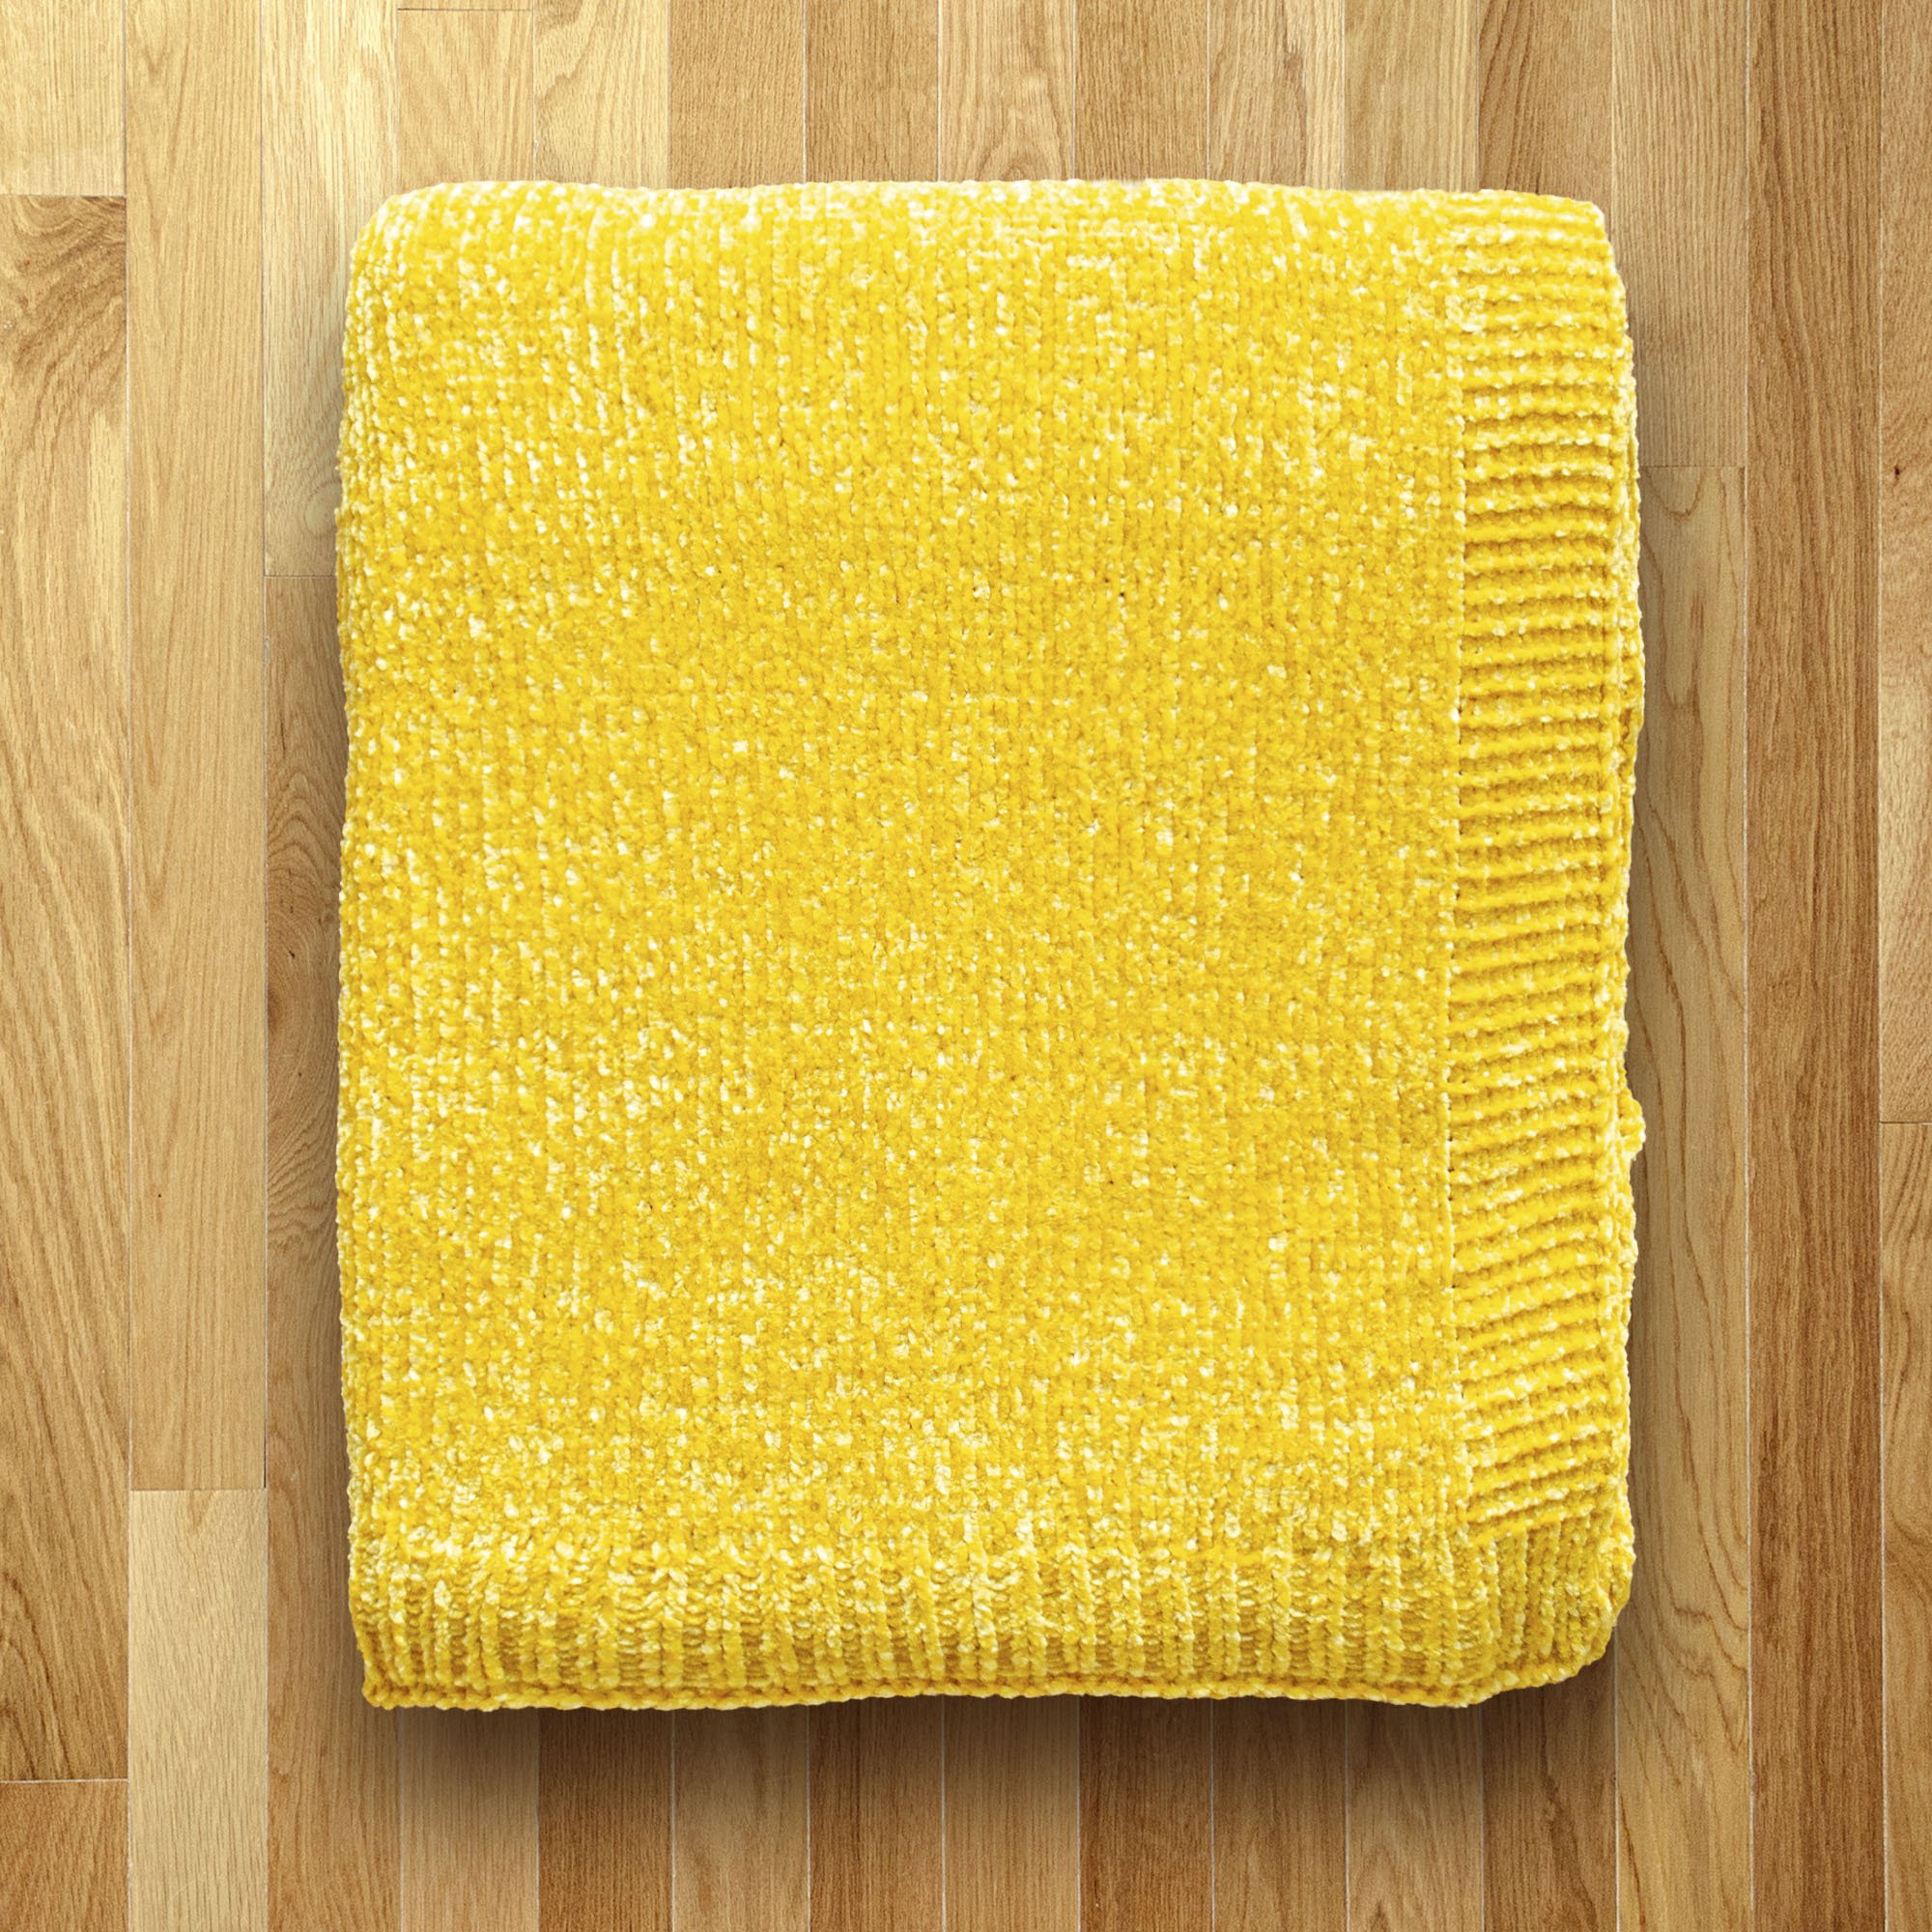 THROWs Chenille Sweater Yellow 2kh 300dpi RGB.jpg